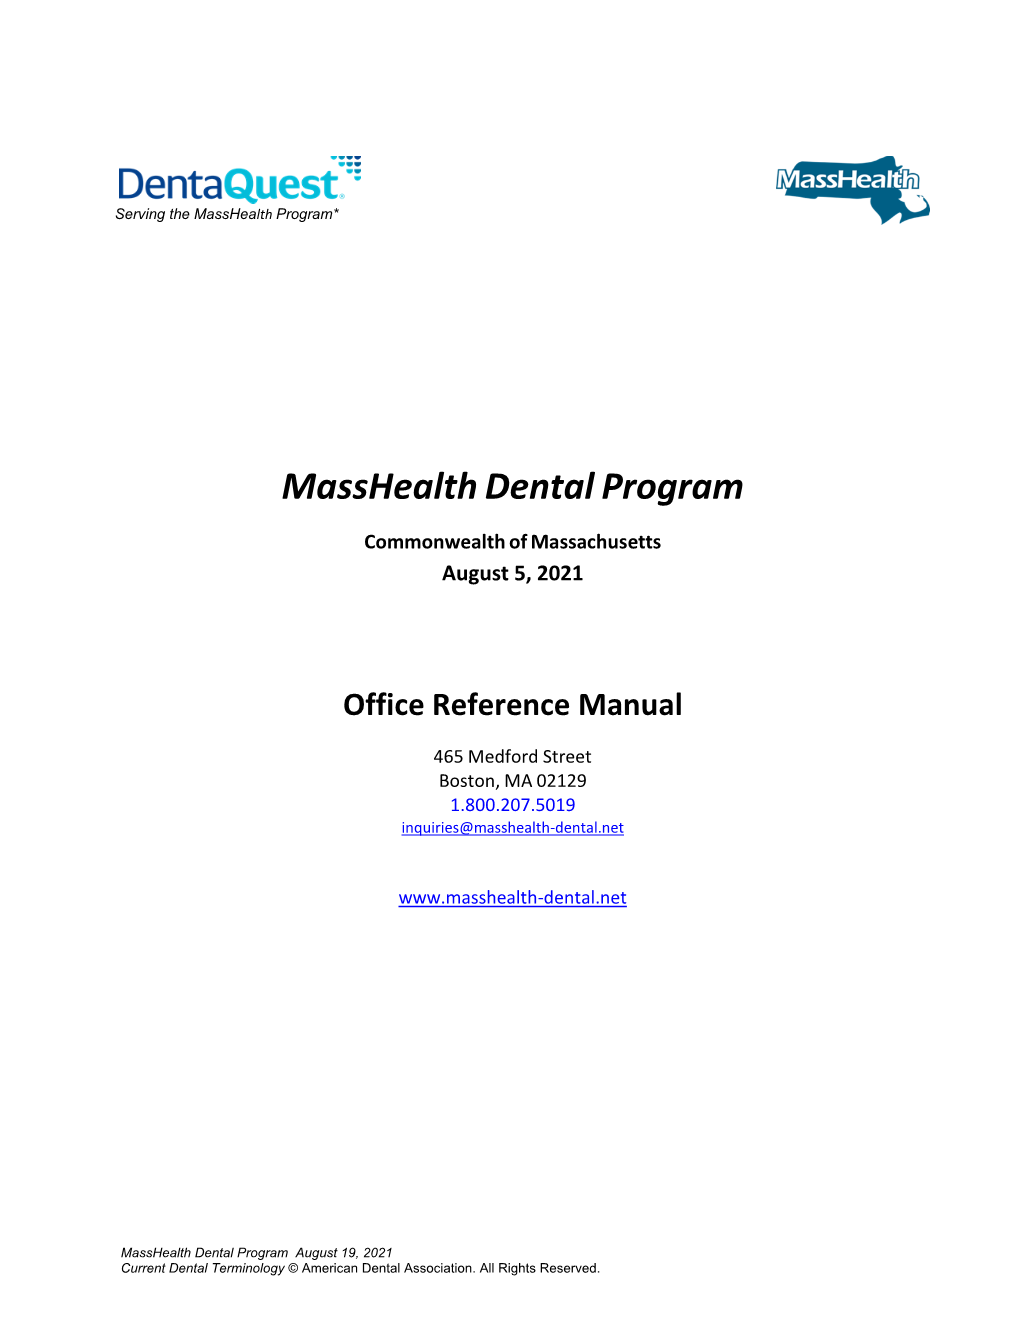 Masshealth Dental Program